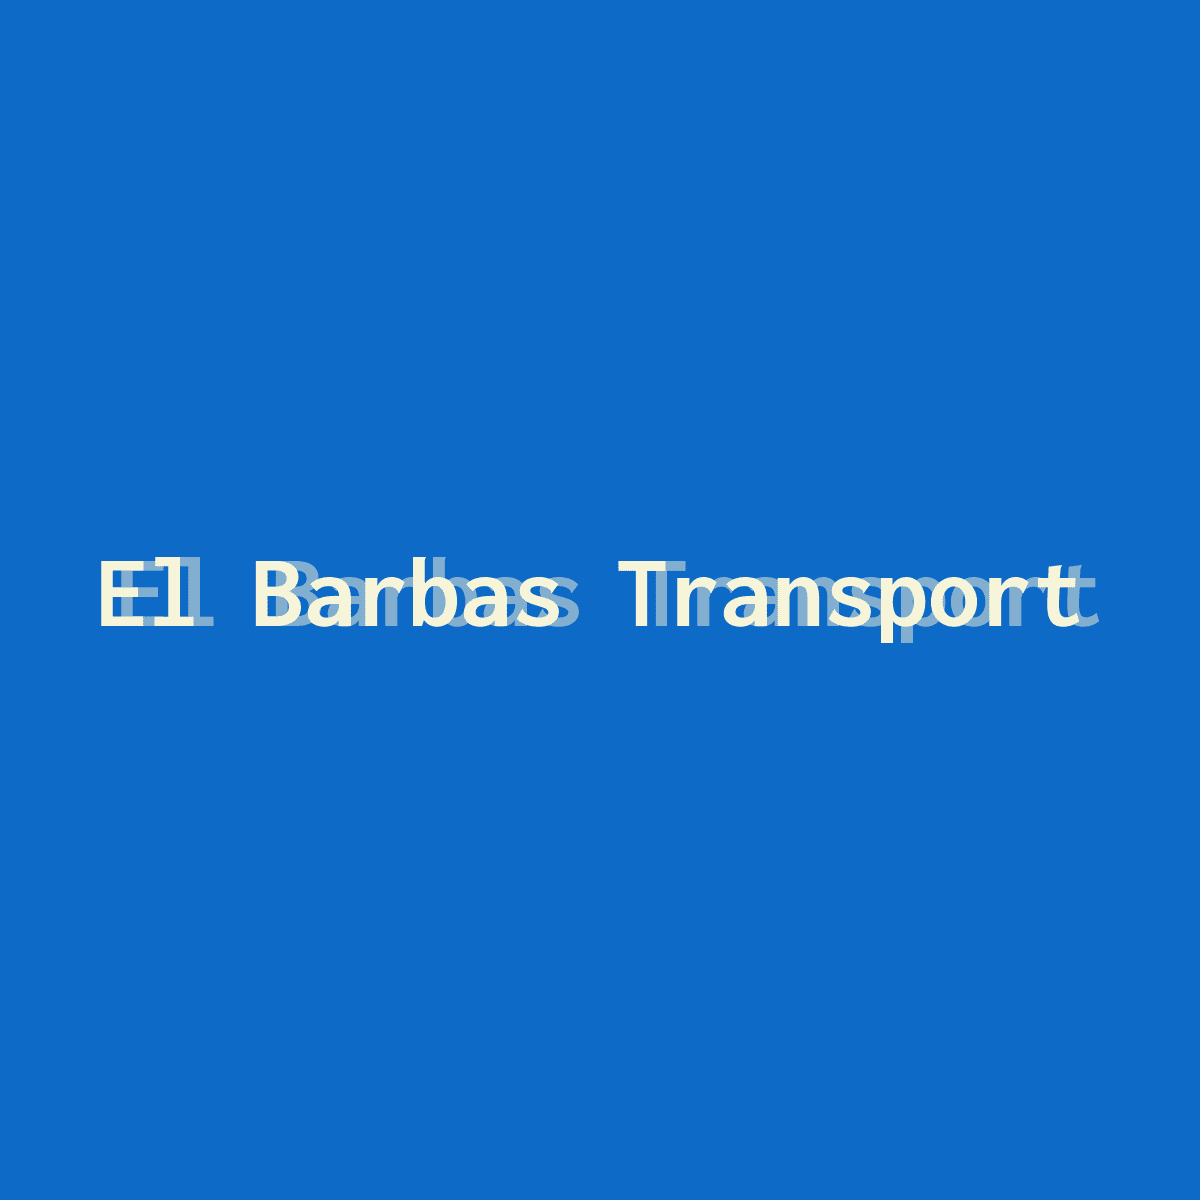 EL BARBAS TRANSPORT LLC'